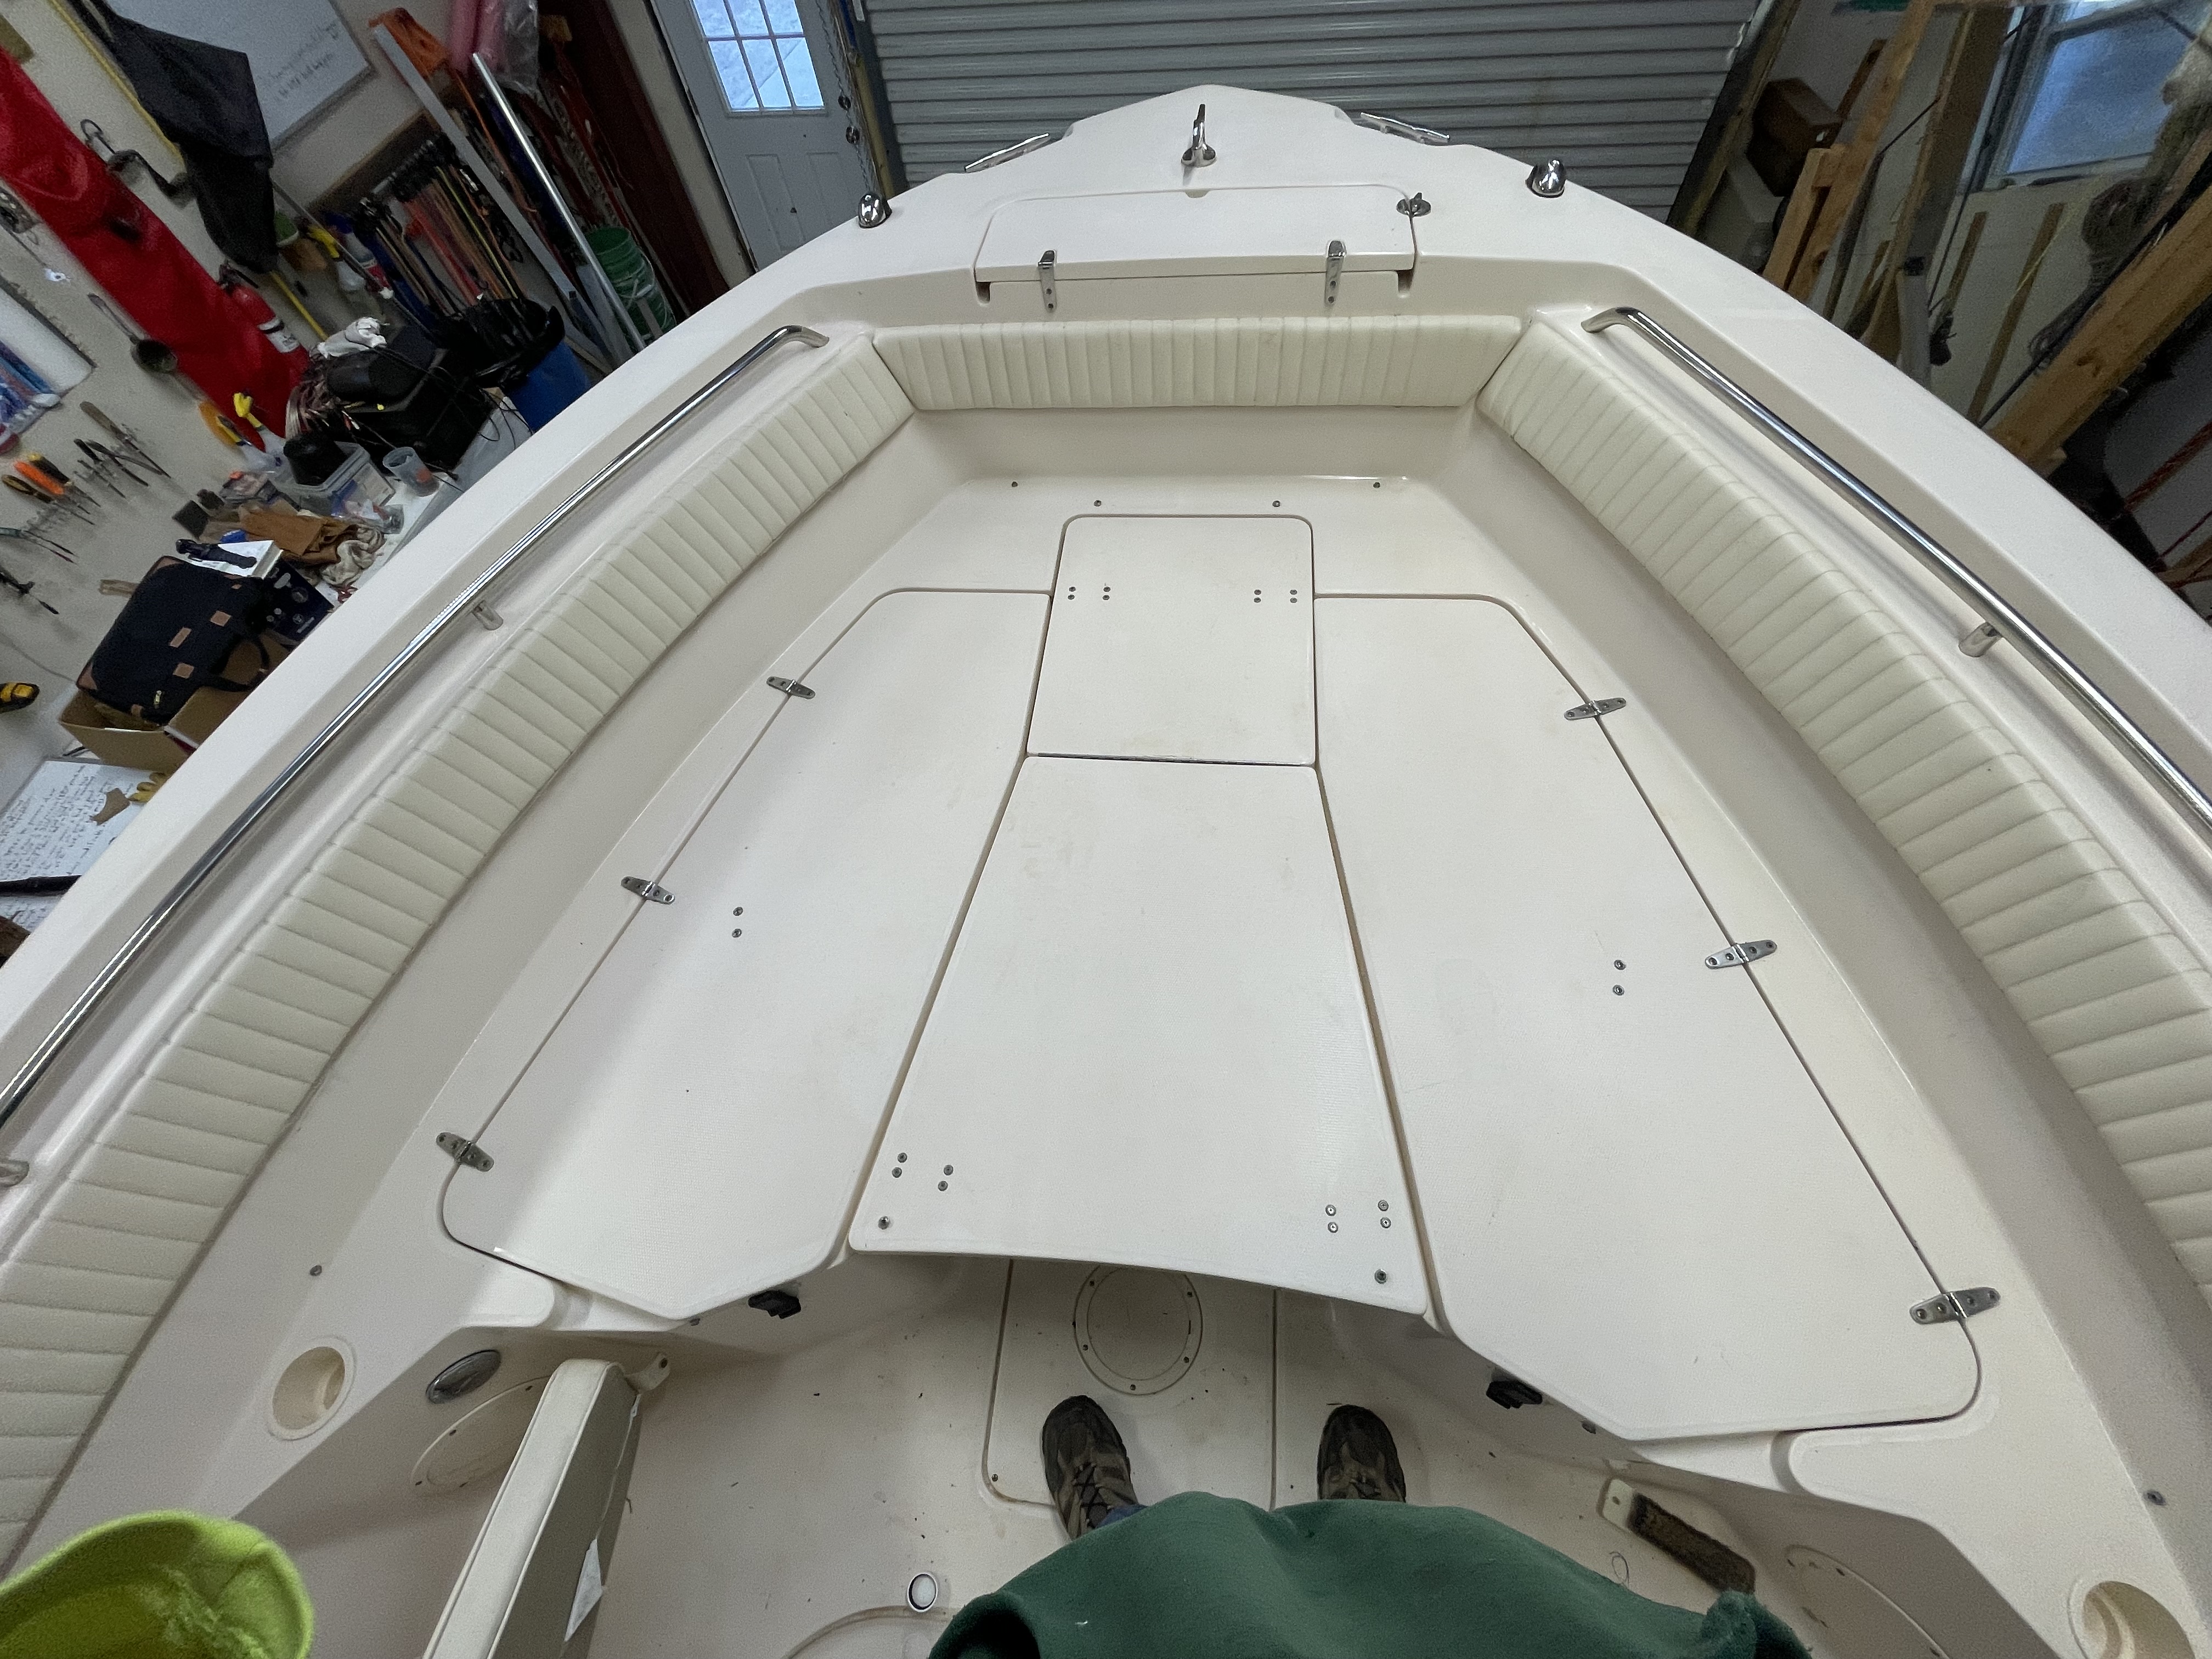 2007 Grady-White 283 Release Power boat for sale in Gainesville, GA - image 2 